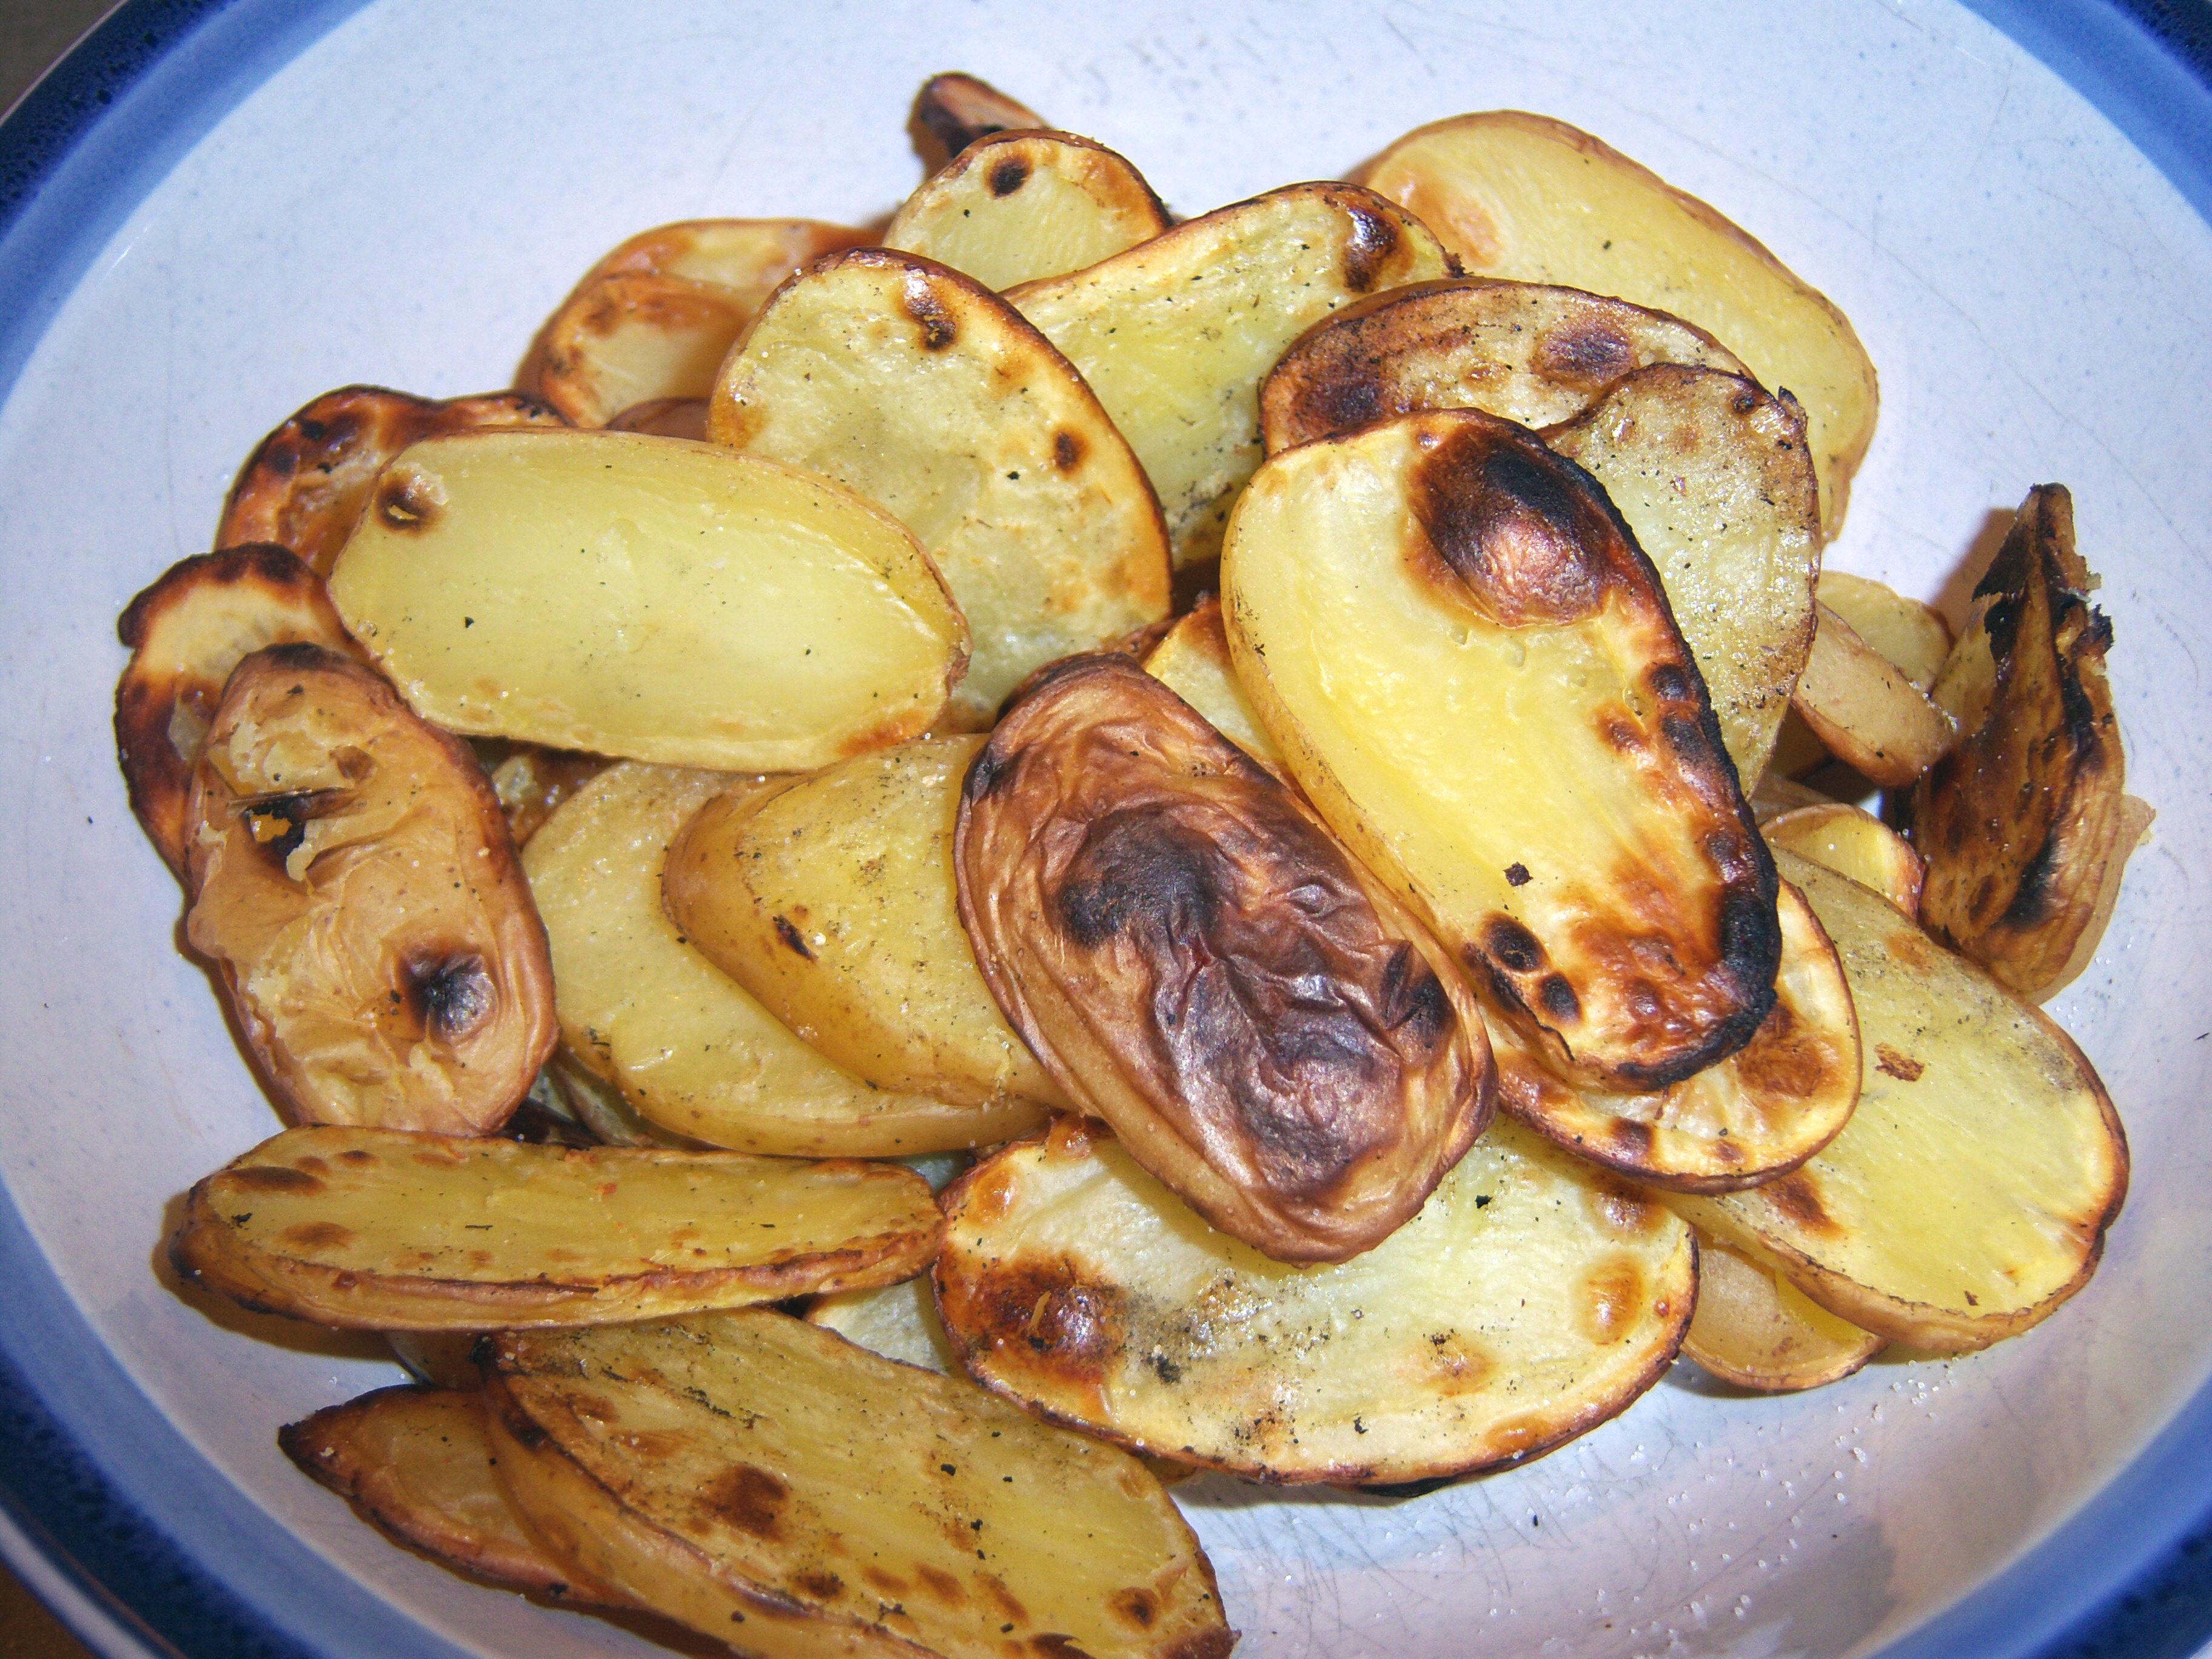 grilled potato